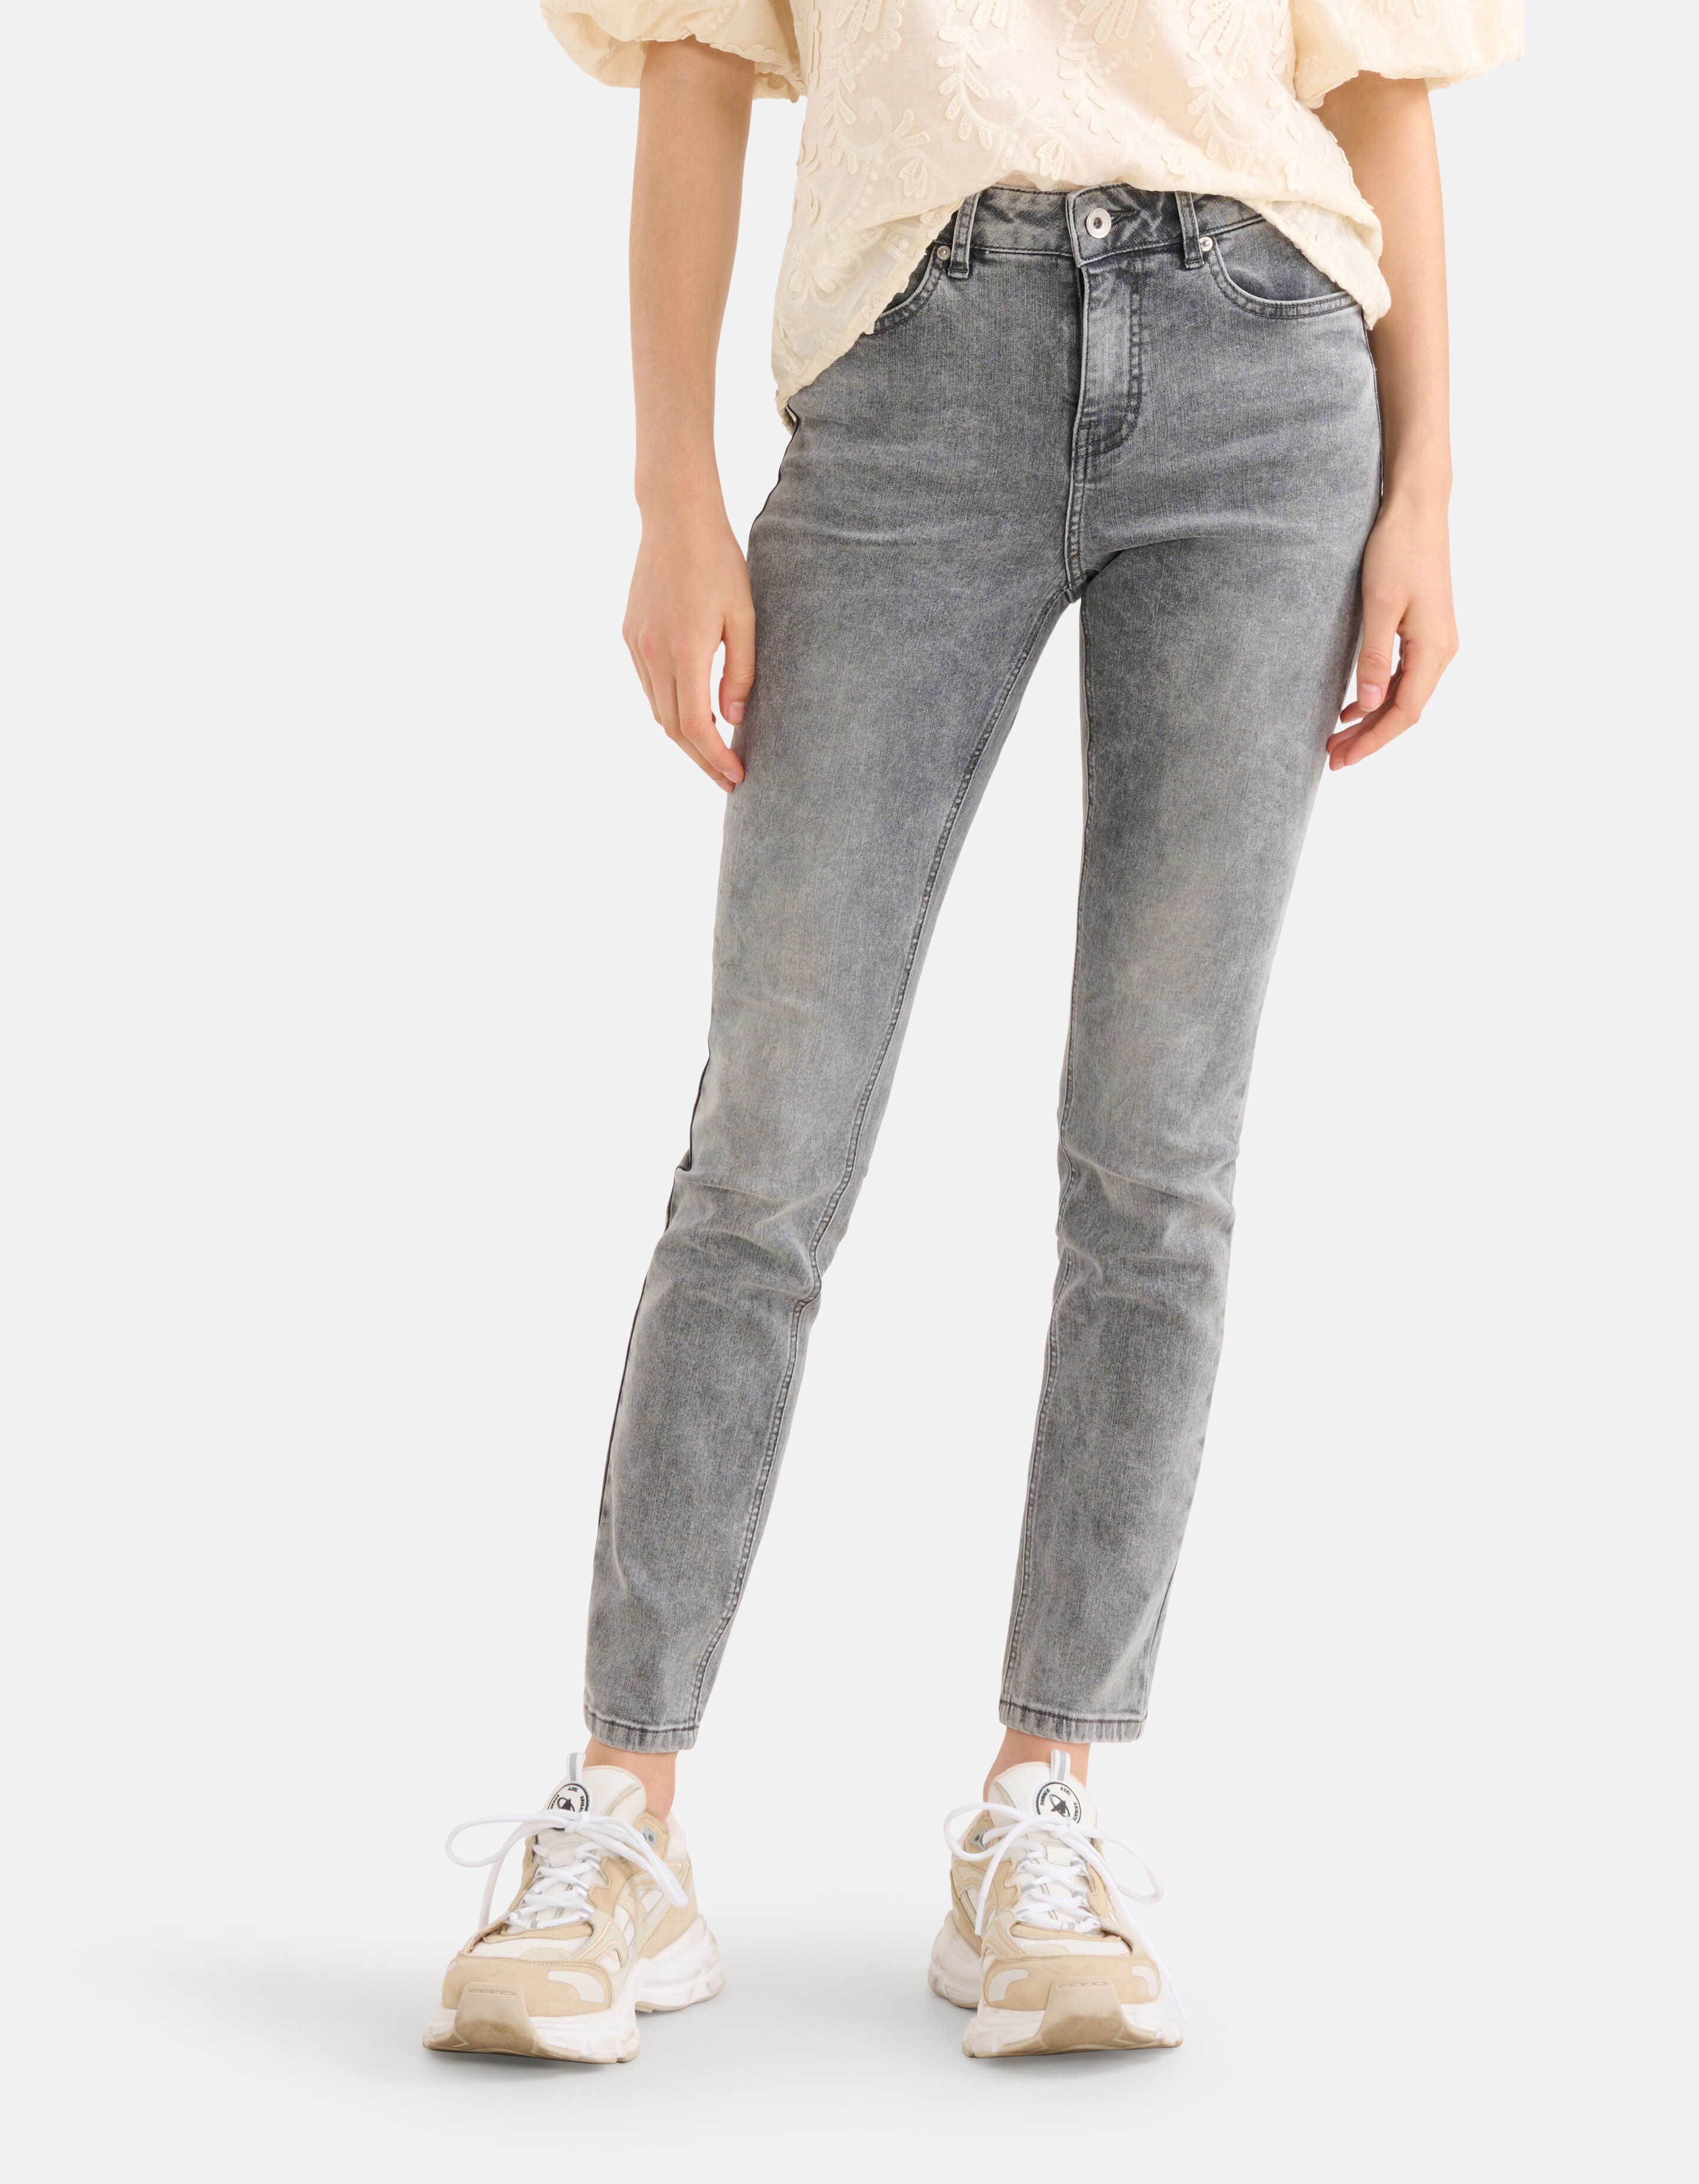 Skinny Denim Jeans L28 Grau SHOEBY WOMEN